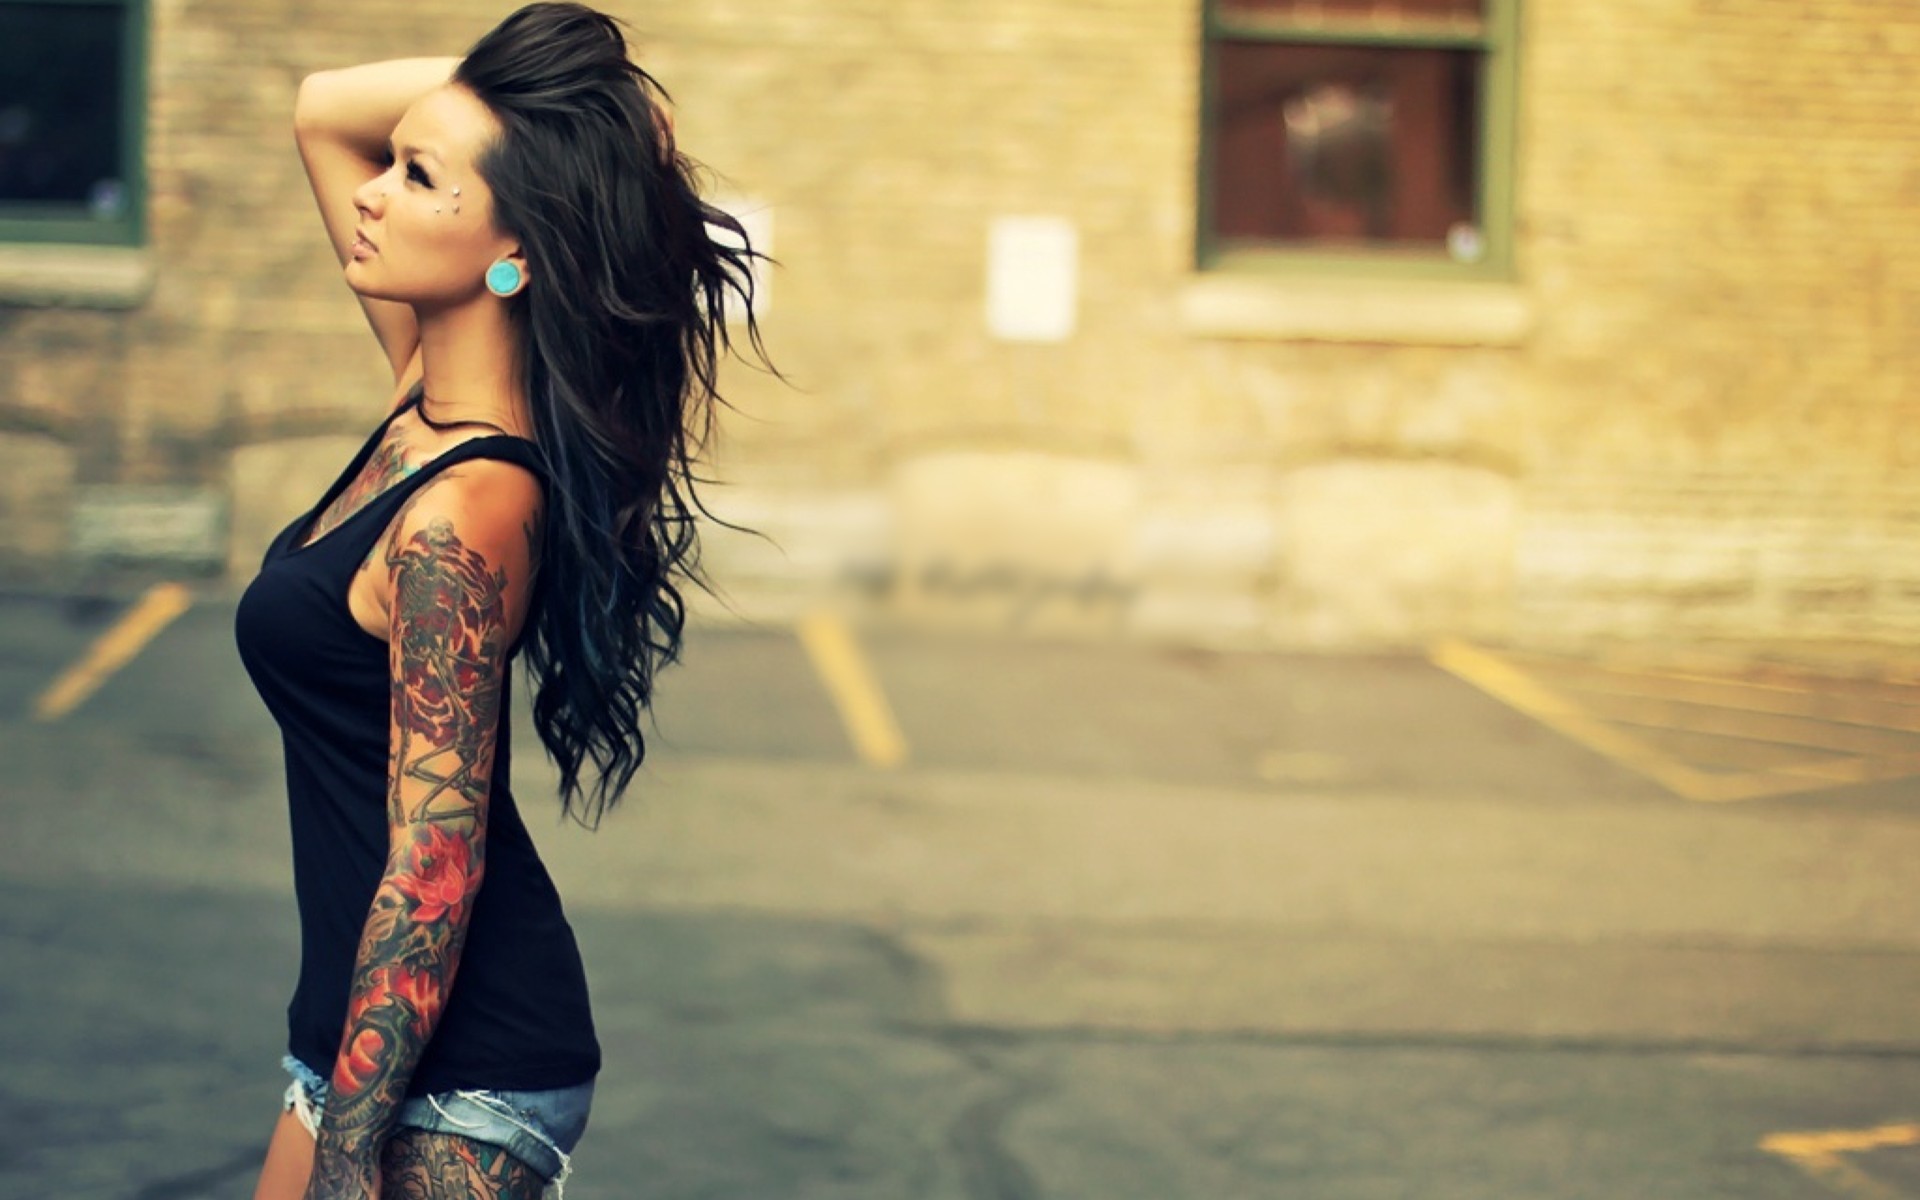 Are tattoos dangerous? | Temporary Tattoo Blog